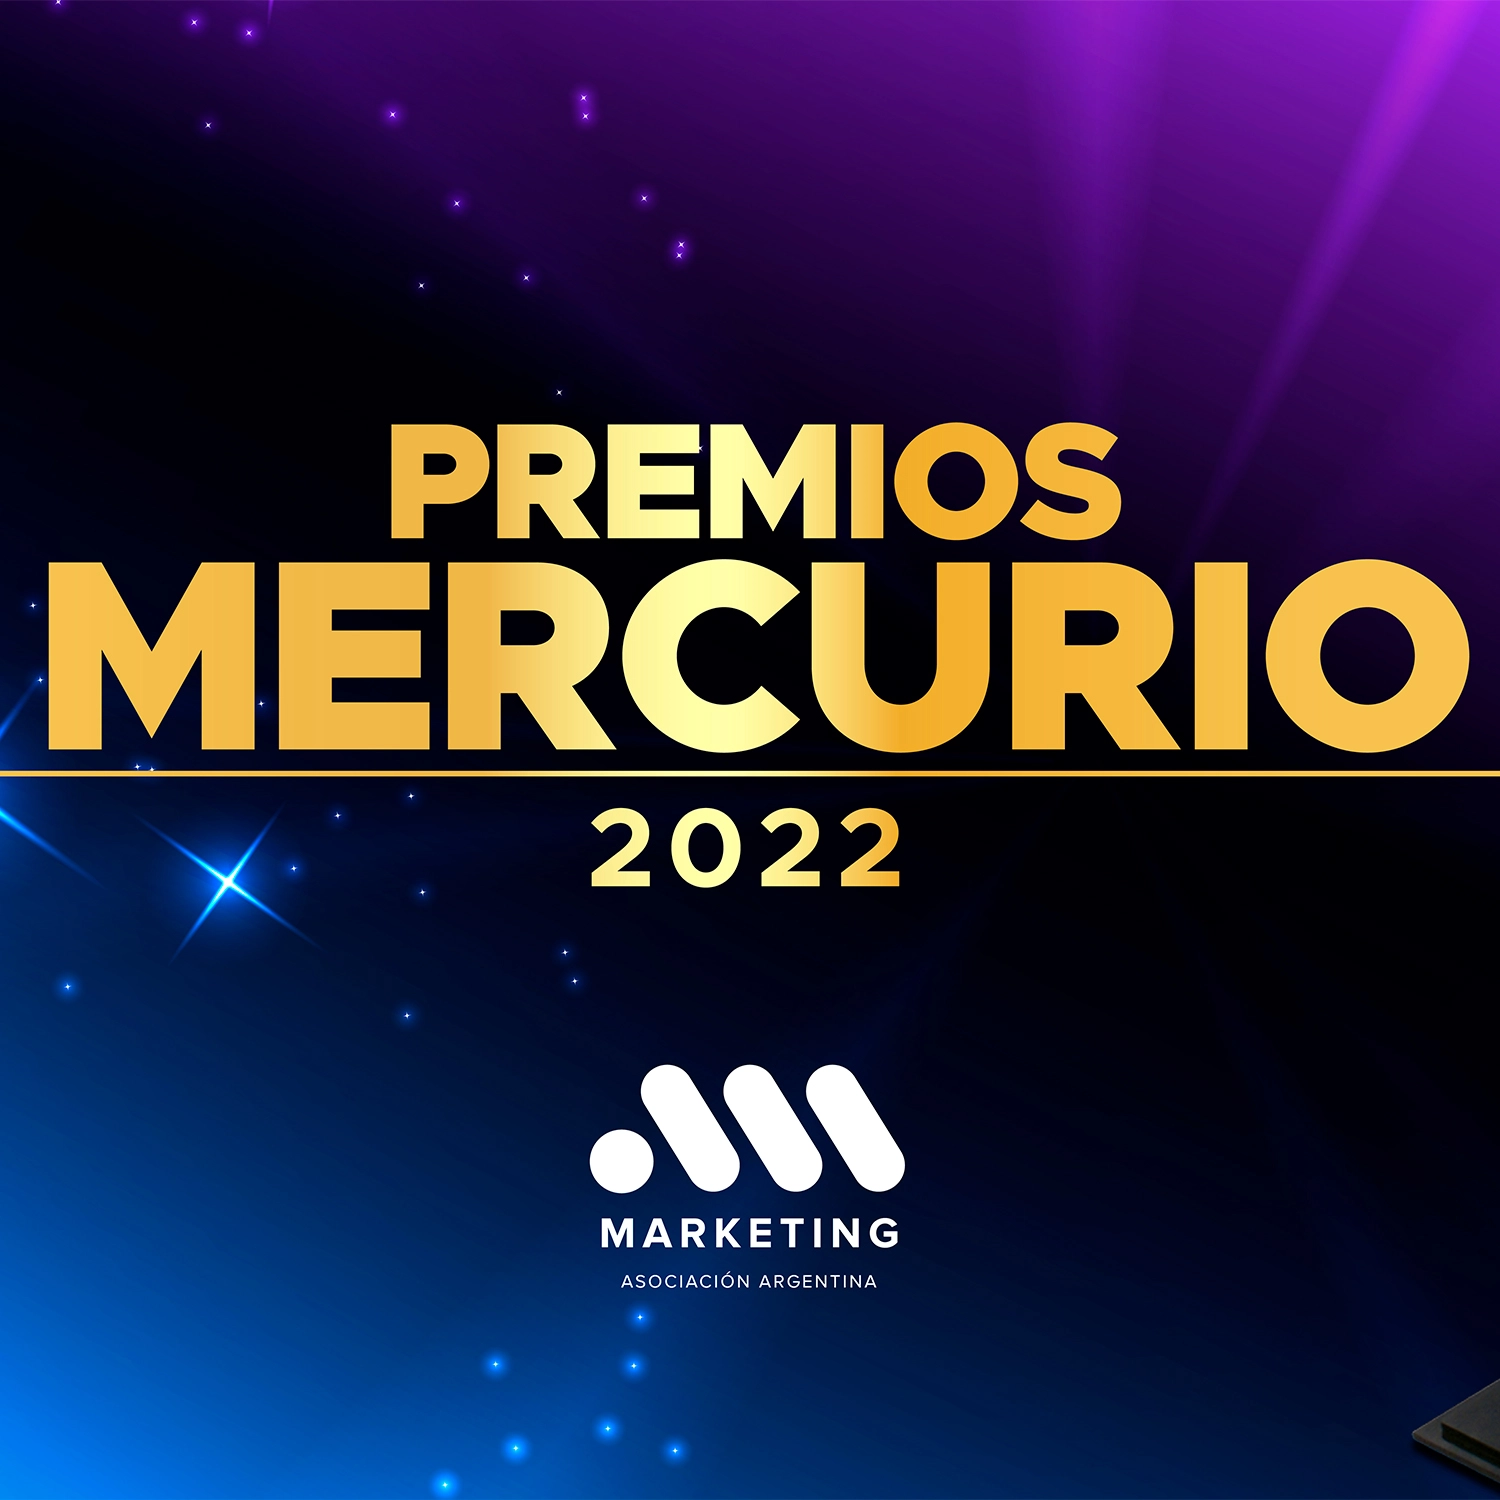 Premios Mercurio 2022